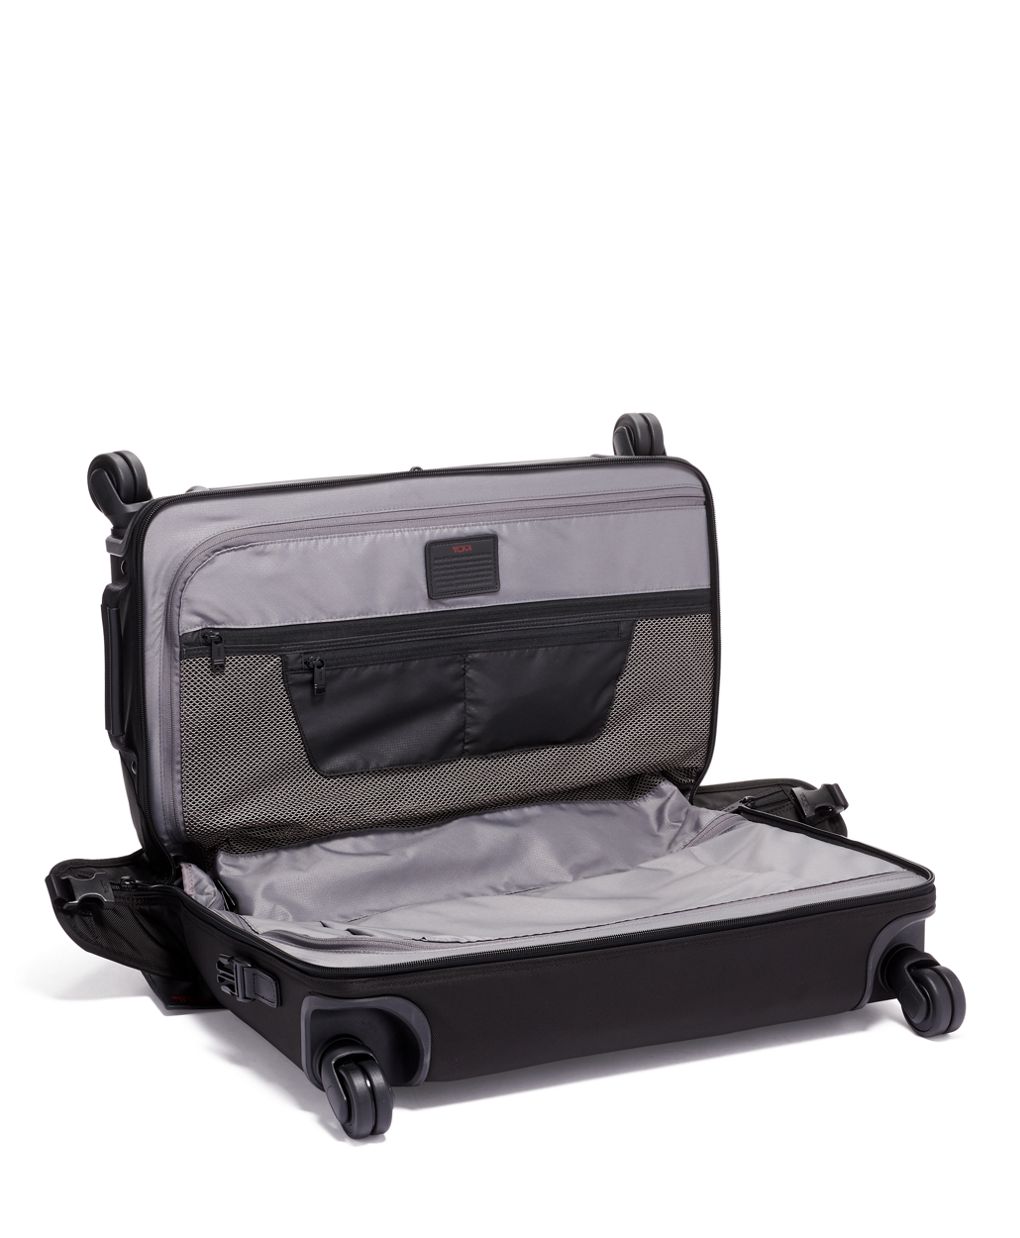 Brand New Travel Garment Bag Luggage Pockets & Locks for Sale